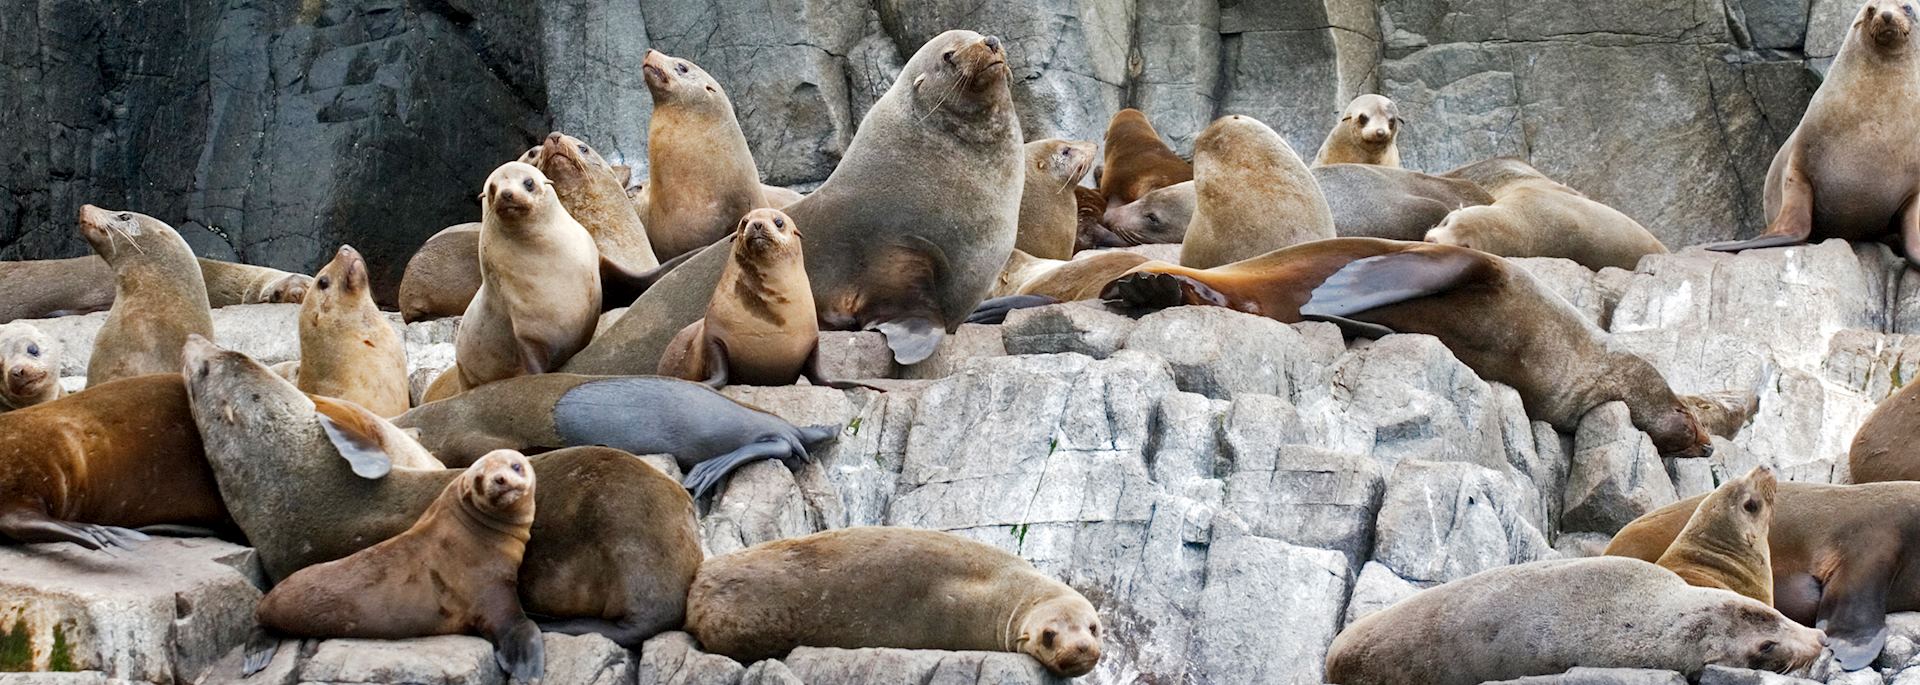 Fur seals, Bruny Island